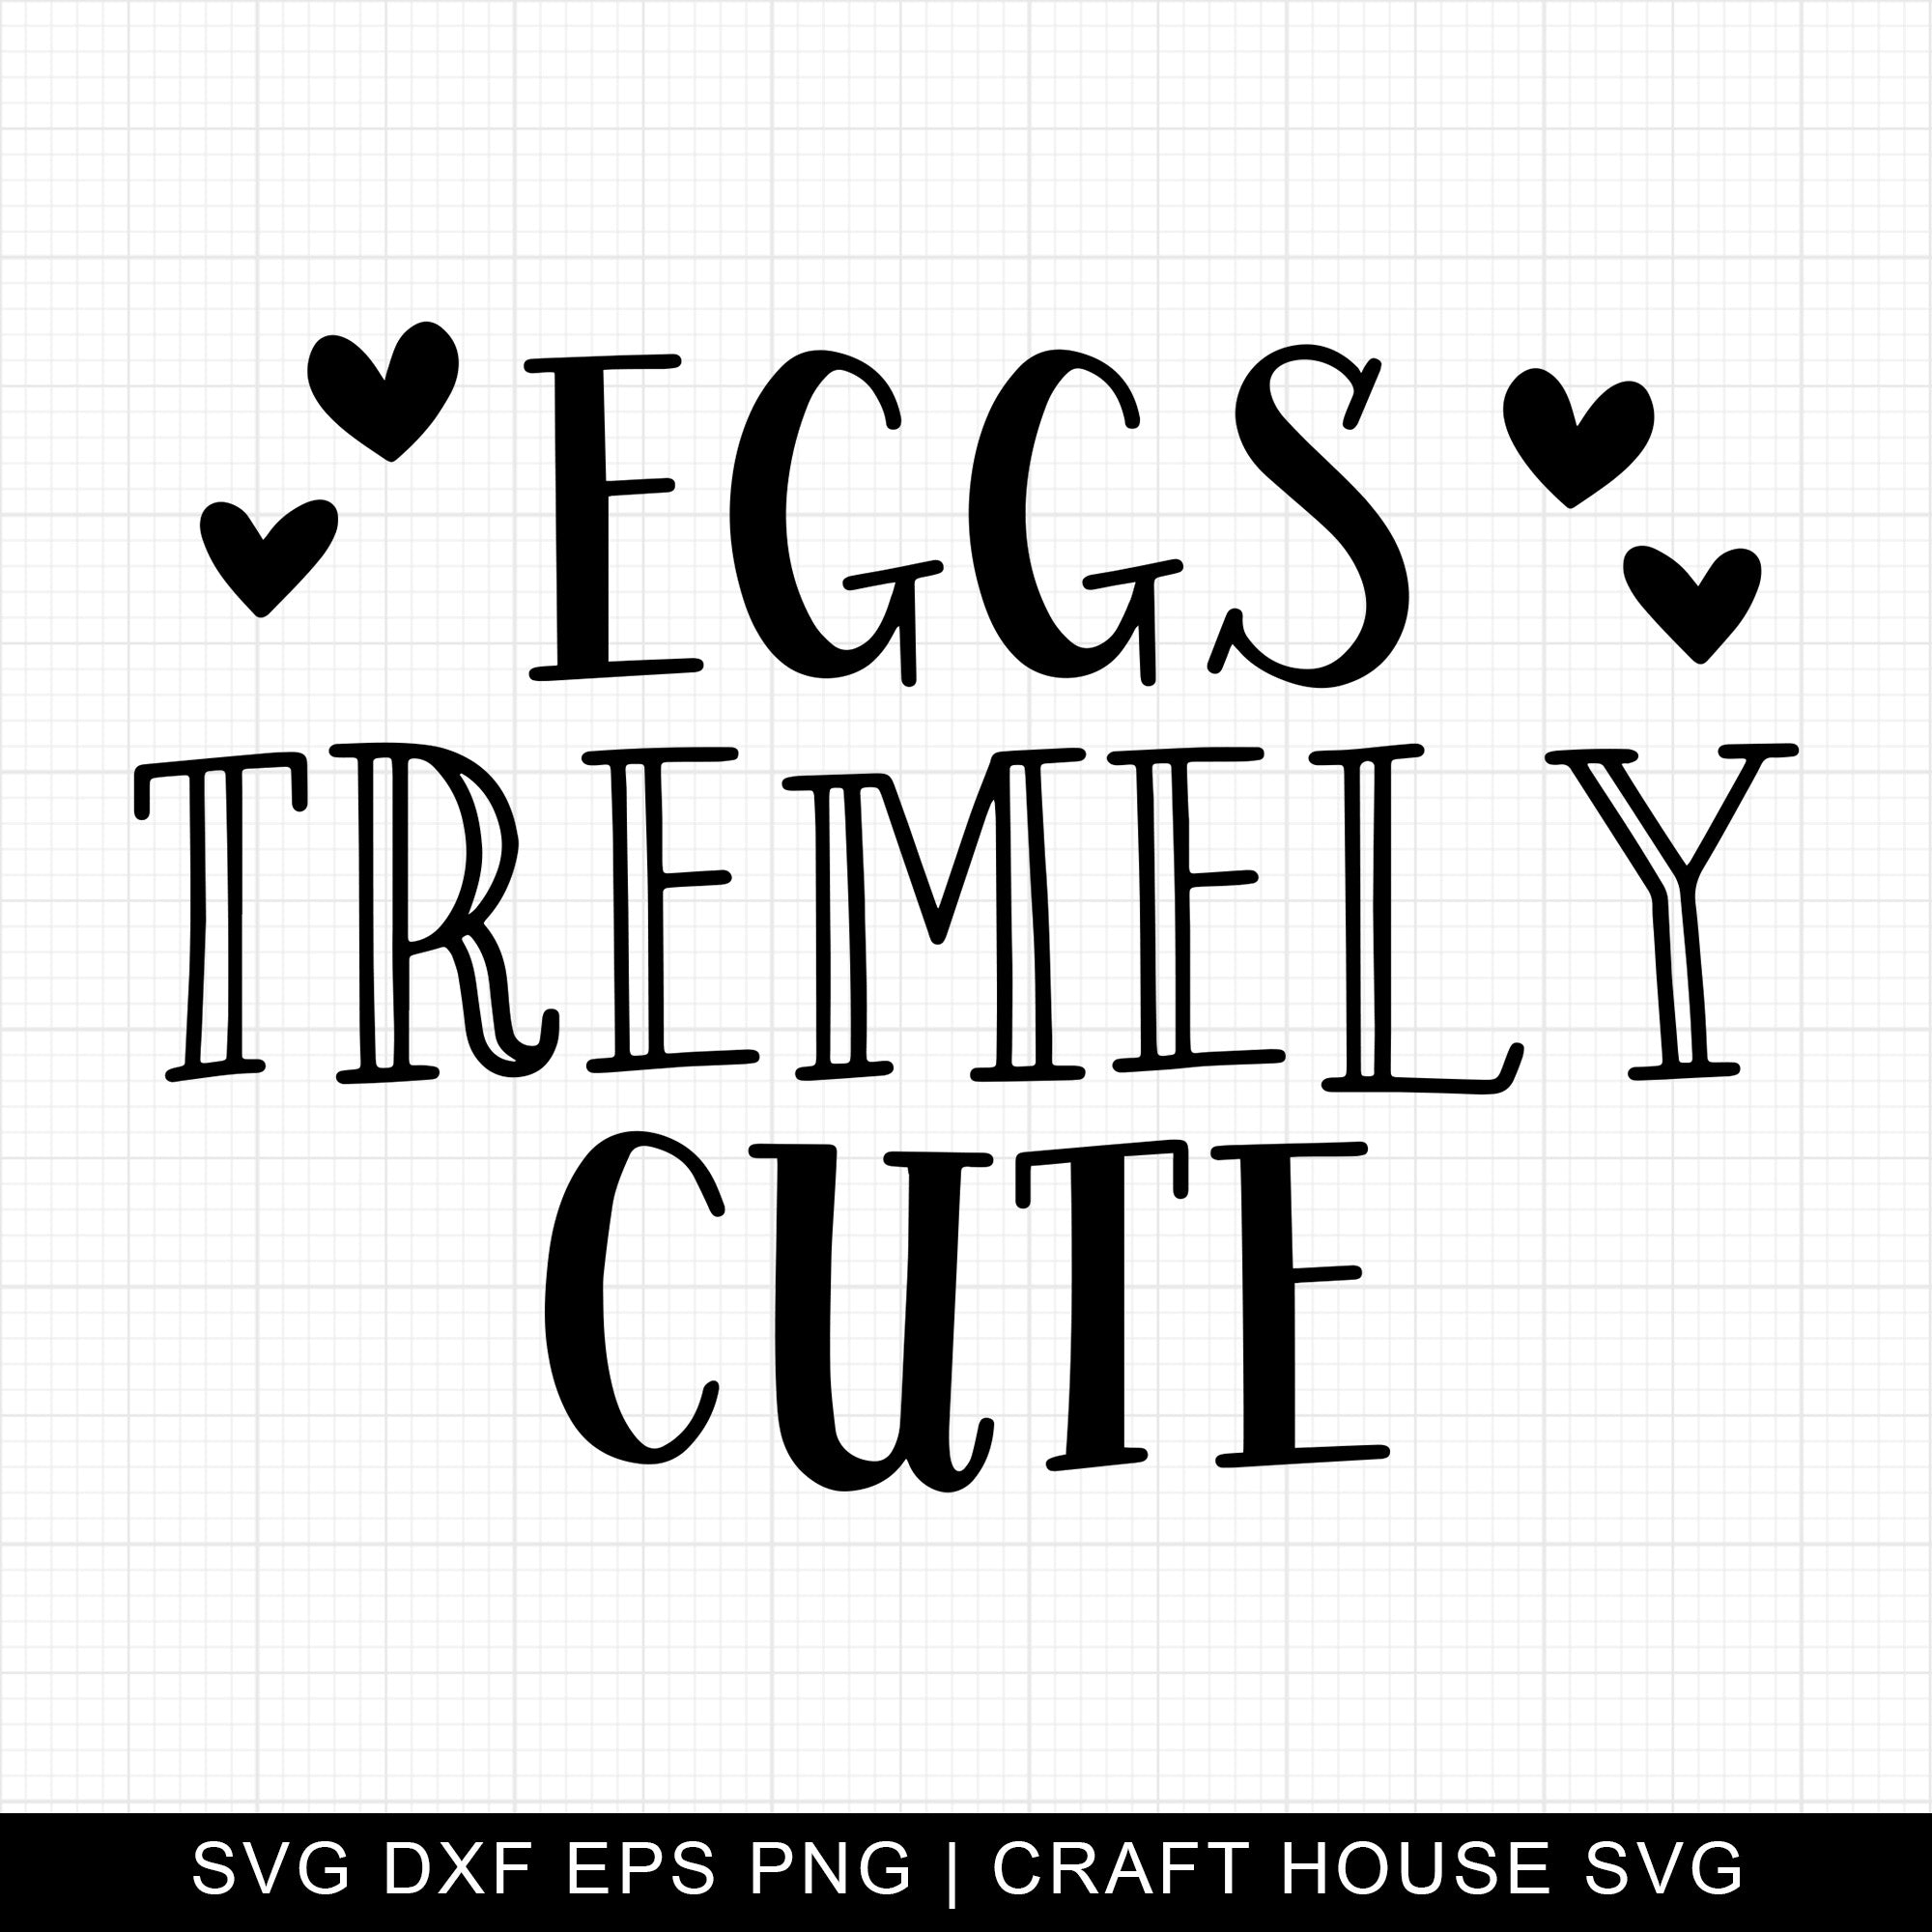 Eggstremely Cute SVG | M9F4